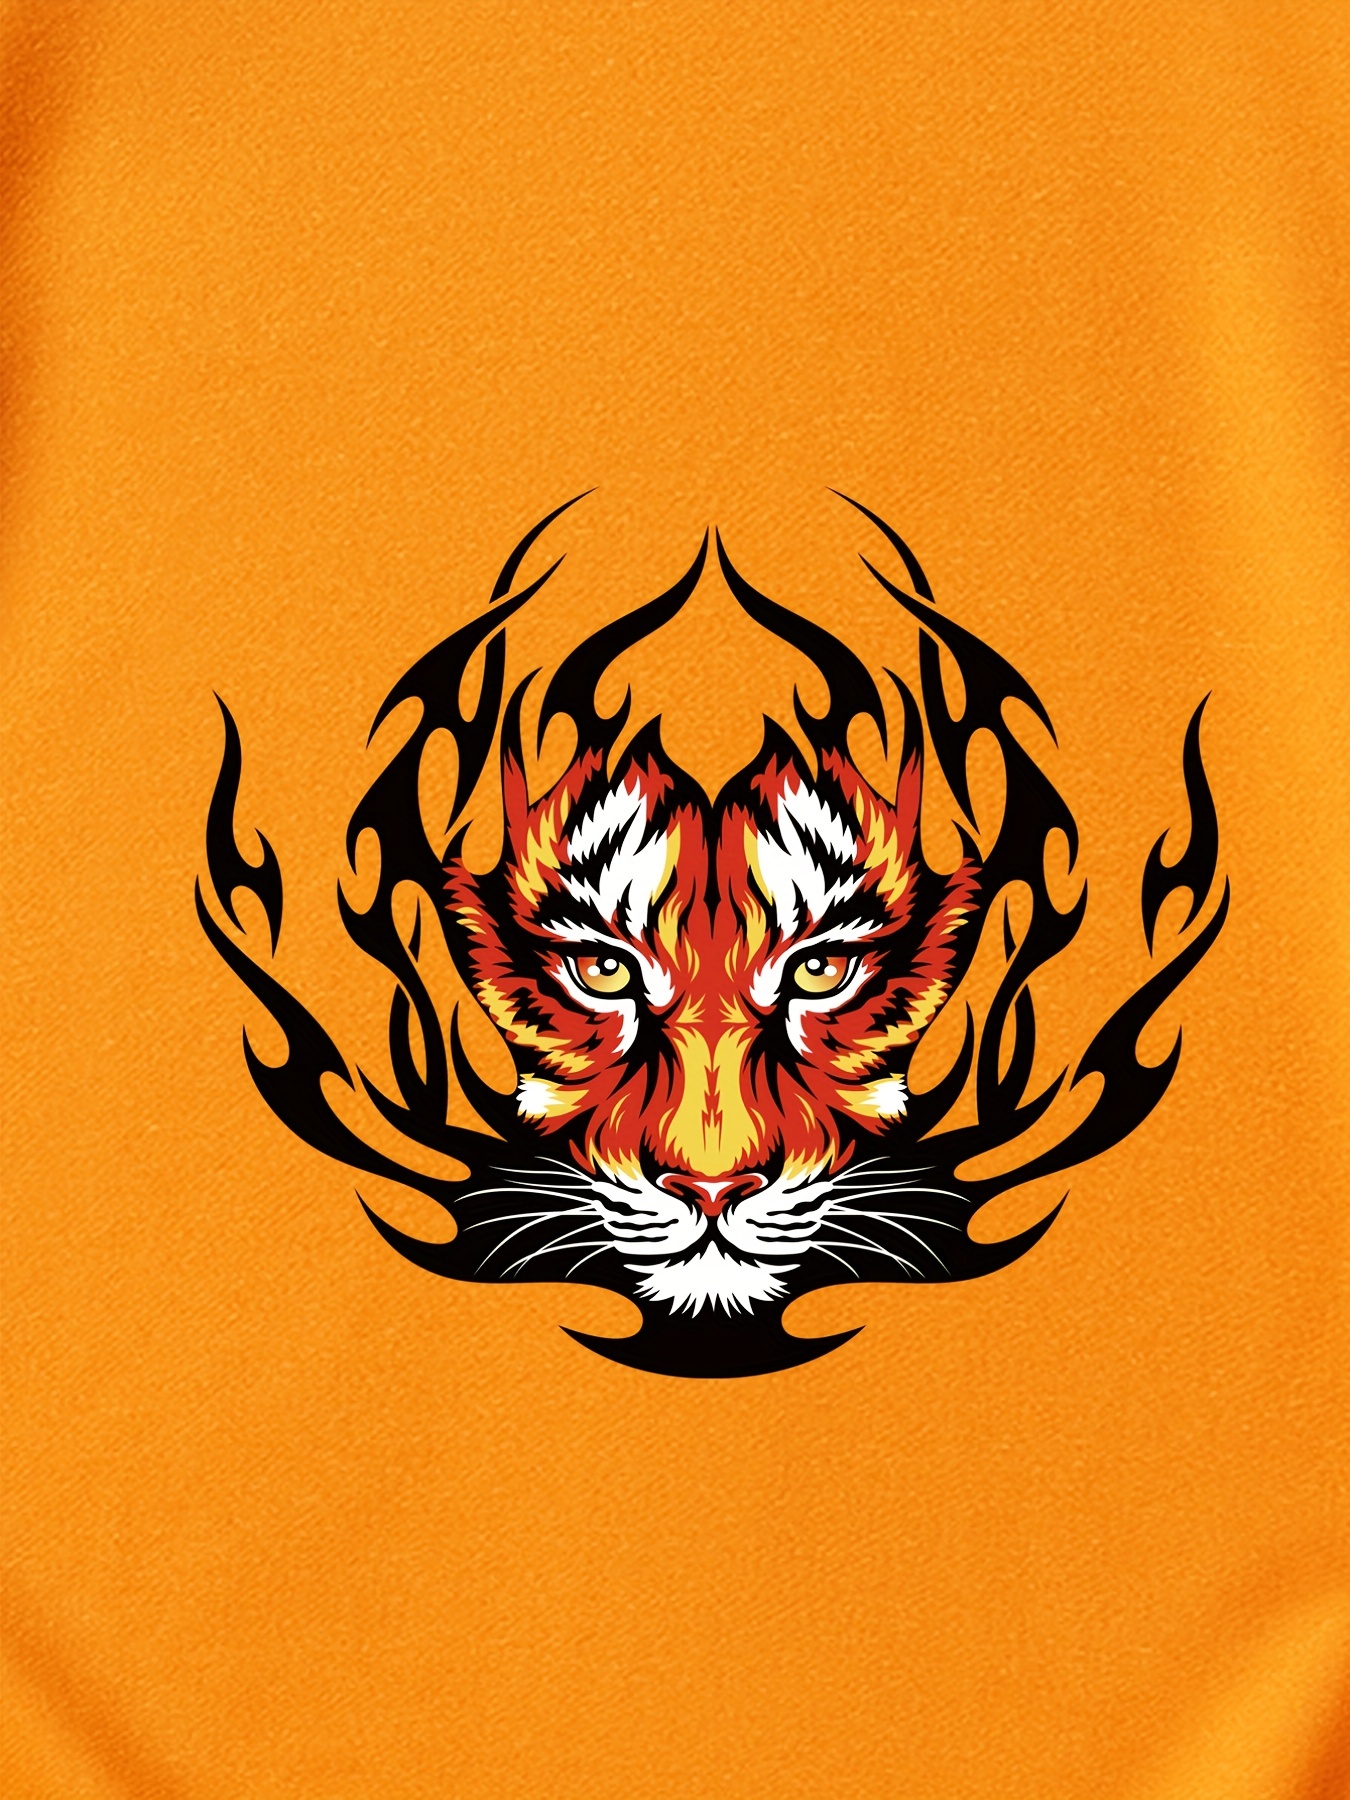 Tiger Orange Tiger Print Face T-Shirt